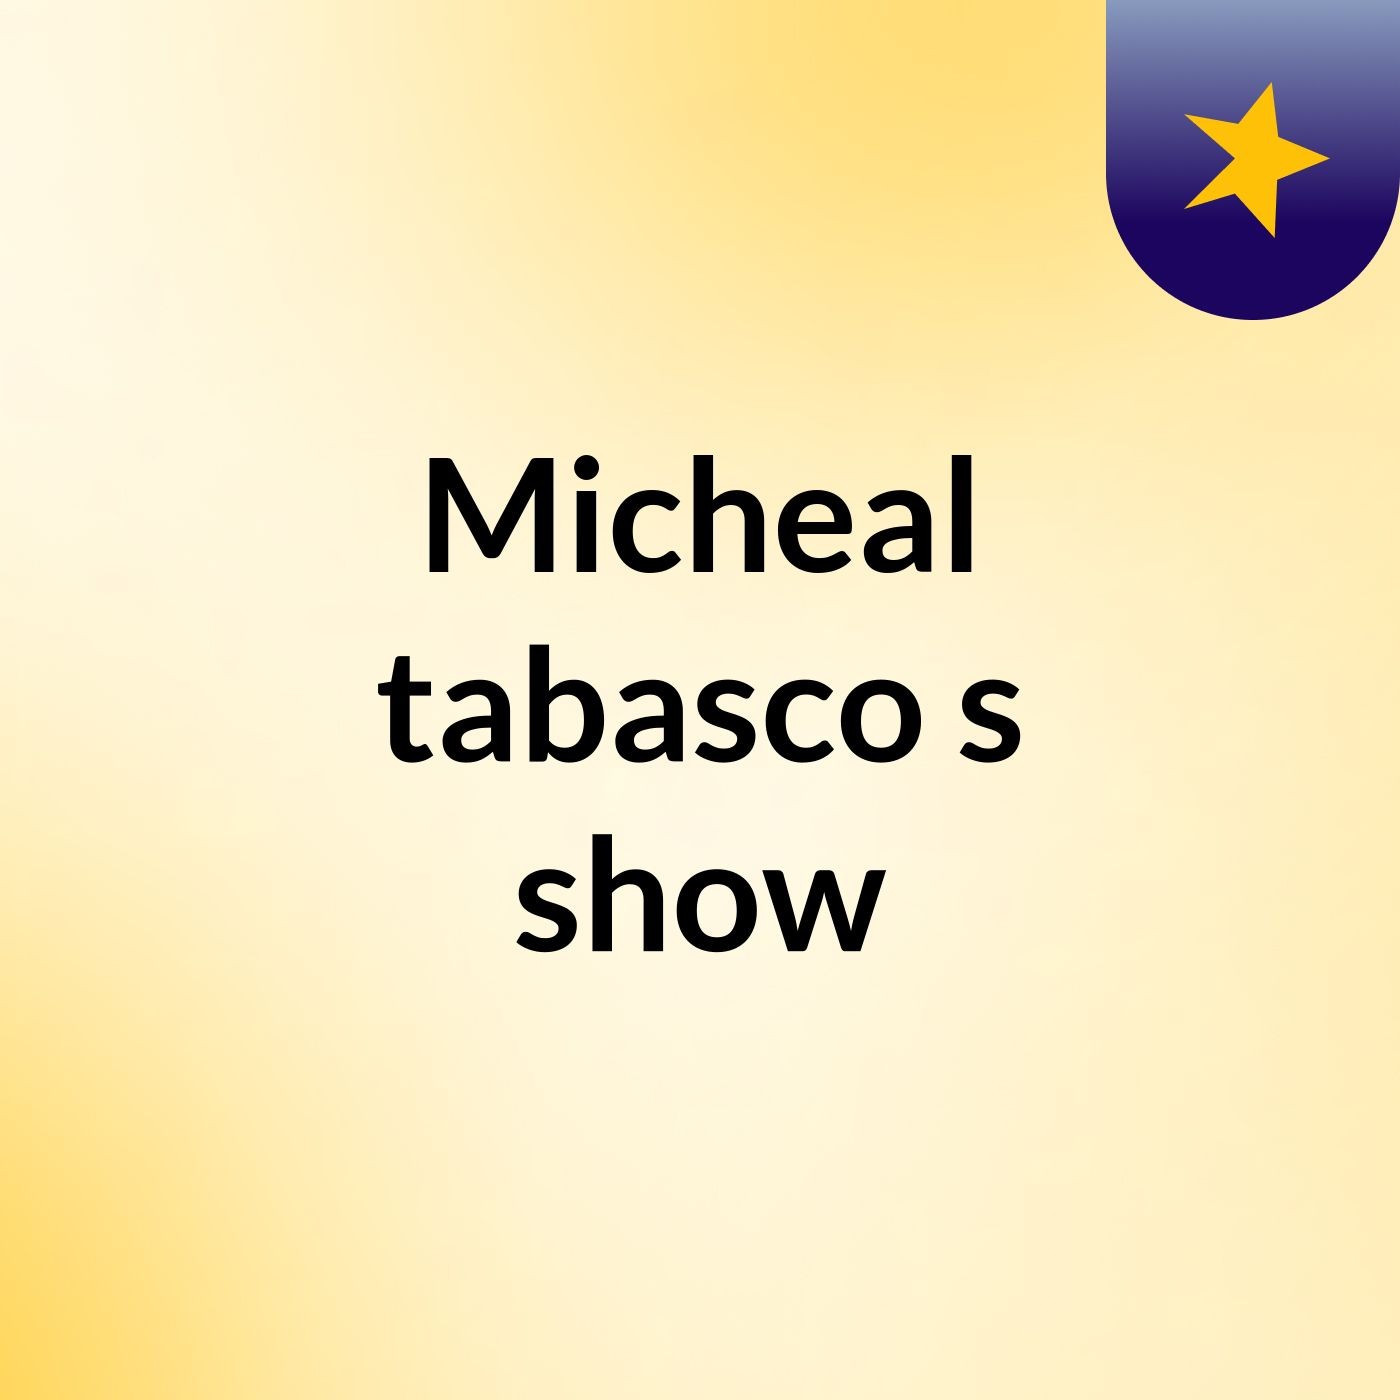 Micheal tabasco's show